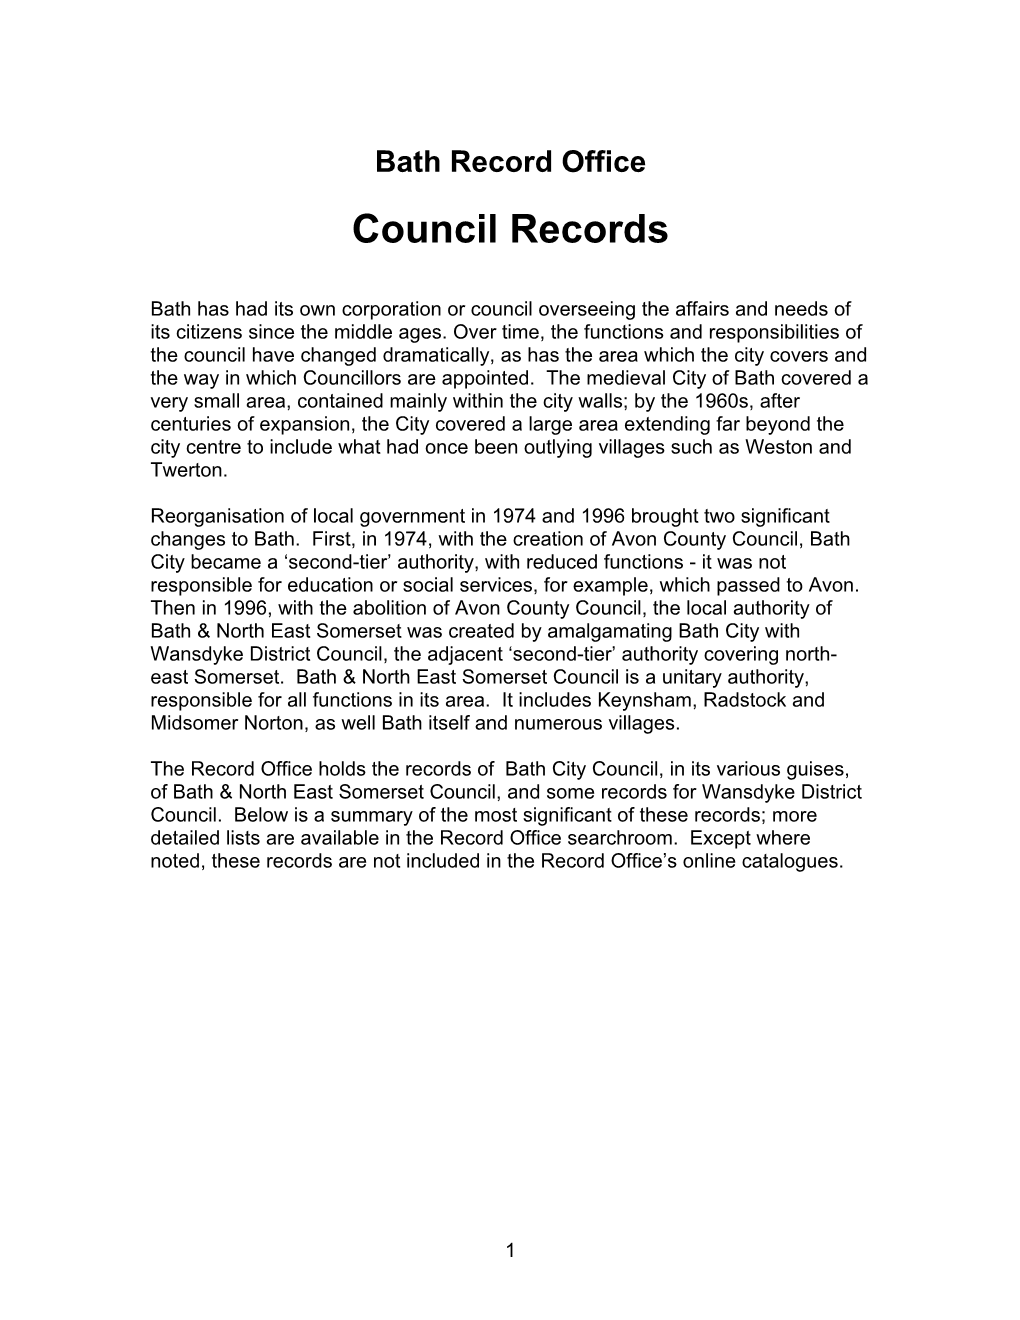 Bath Record Office Council Records